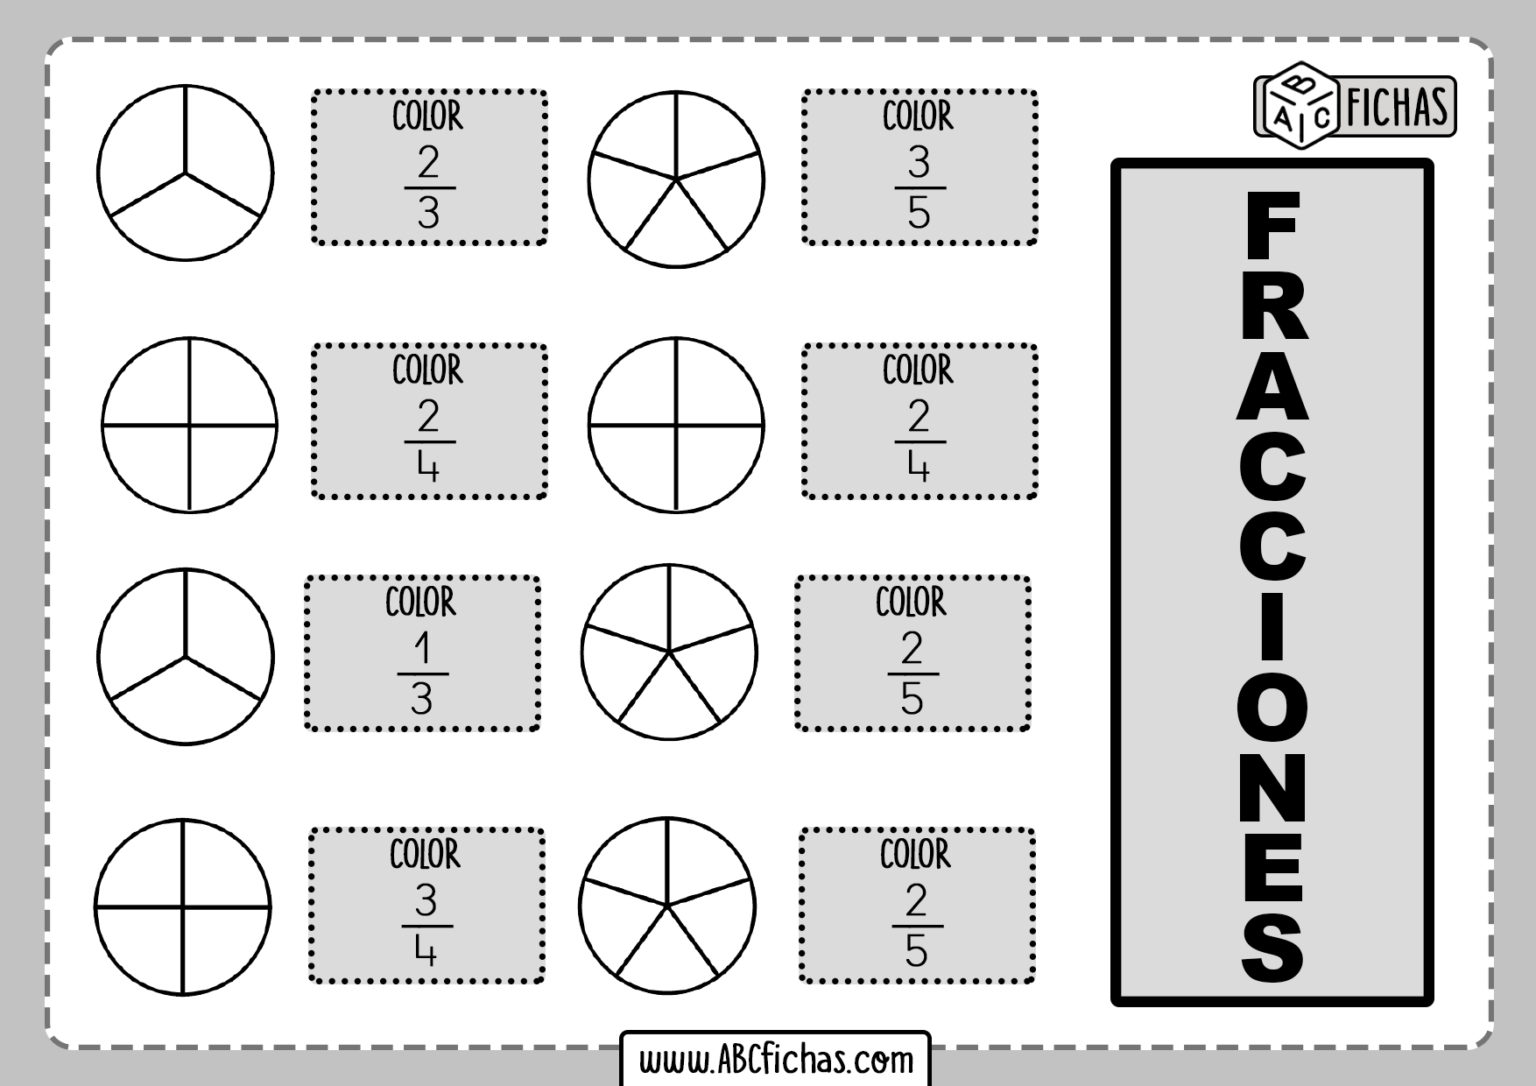 Fichas De Fracciones Matematicas Abc Fichas 6088